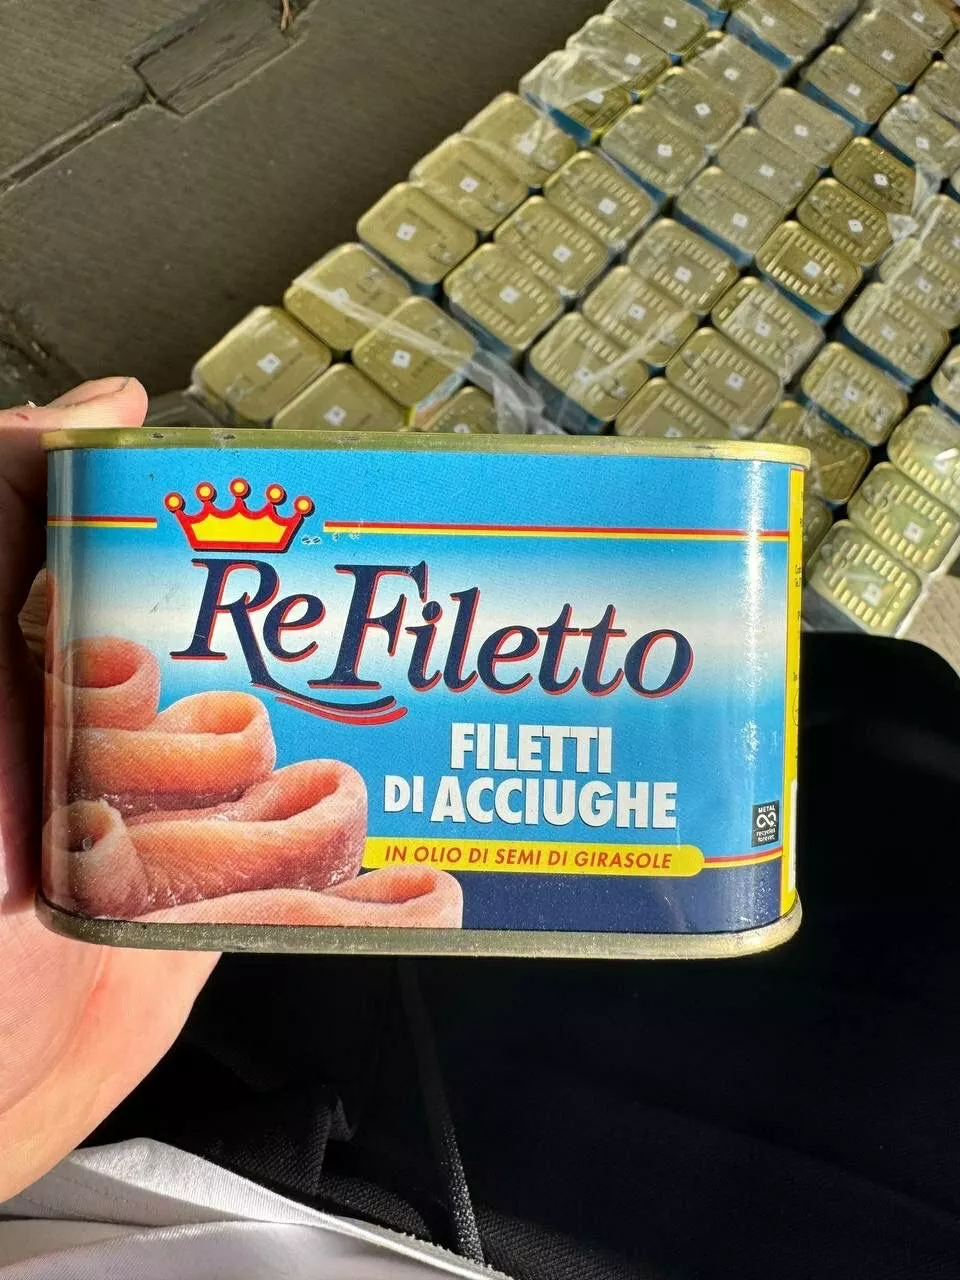 фотография продукта Филе анчоусов re filetto